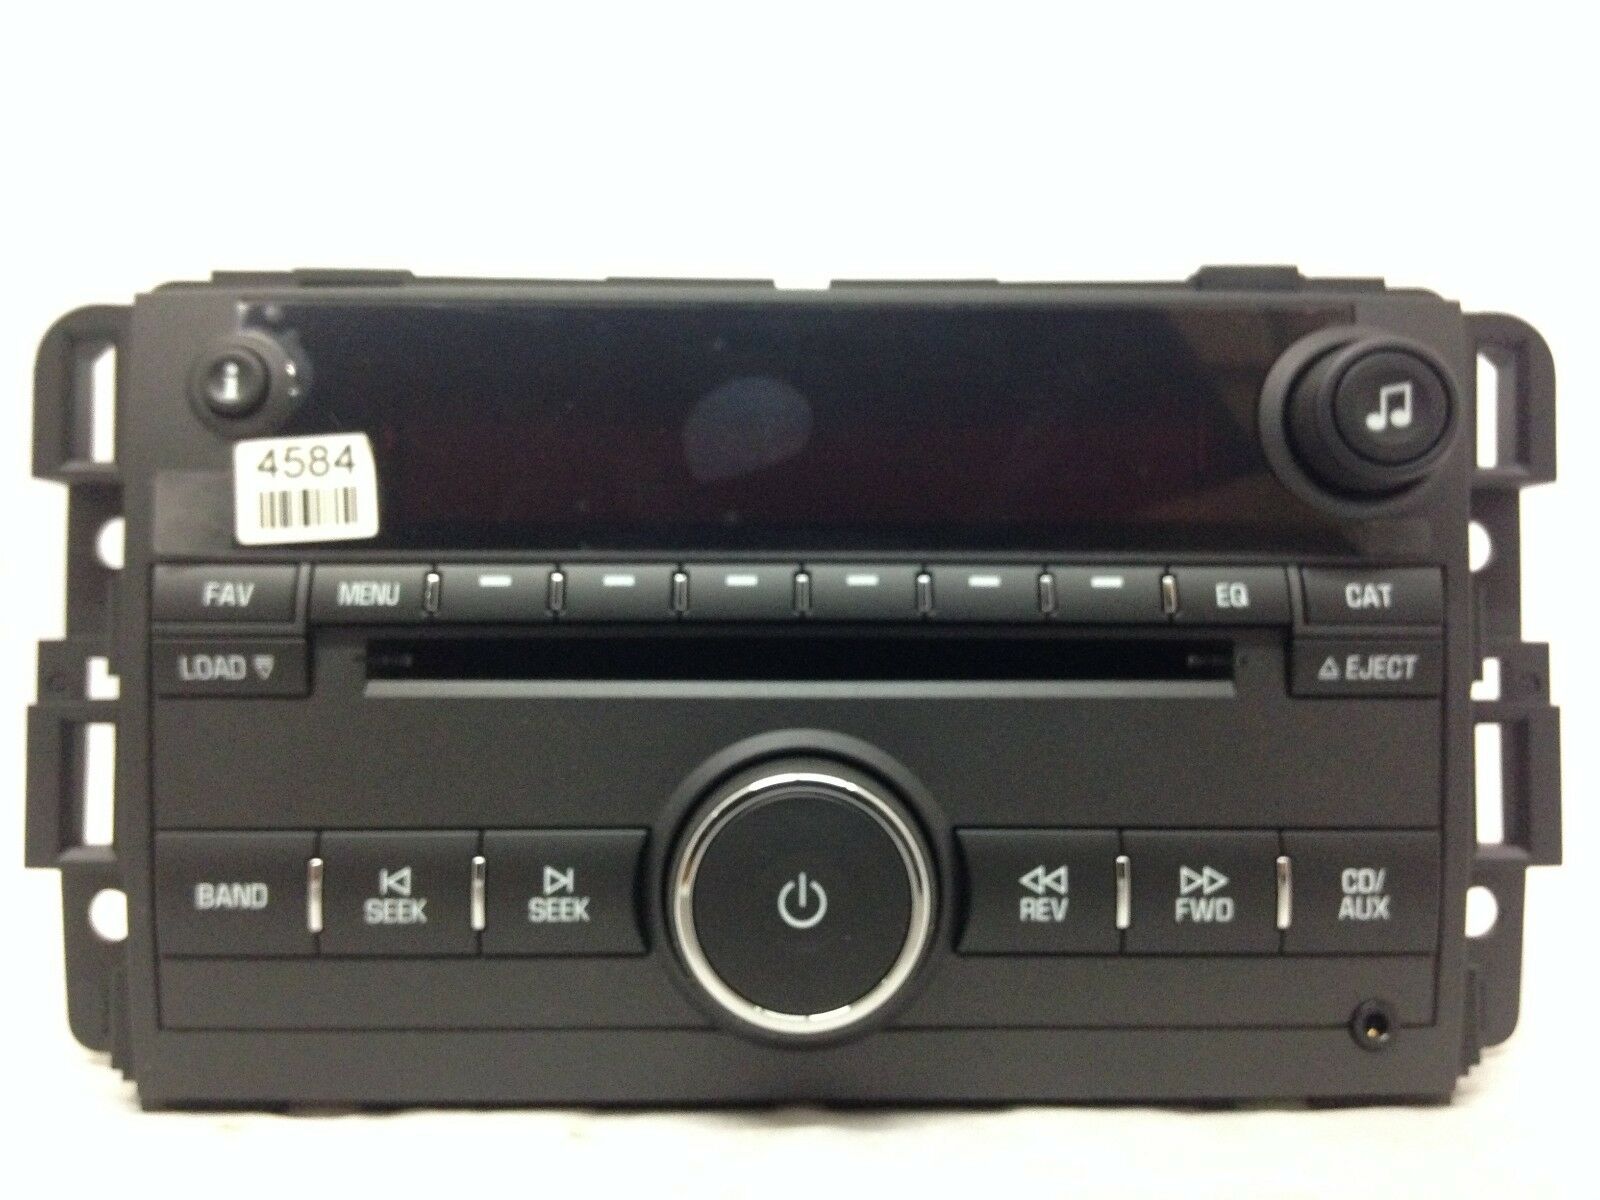 Pontiac Torrent 2009 CD6 MP3 XM ready US9 radio NEW